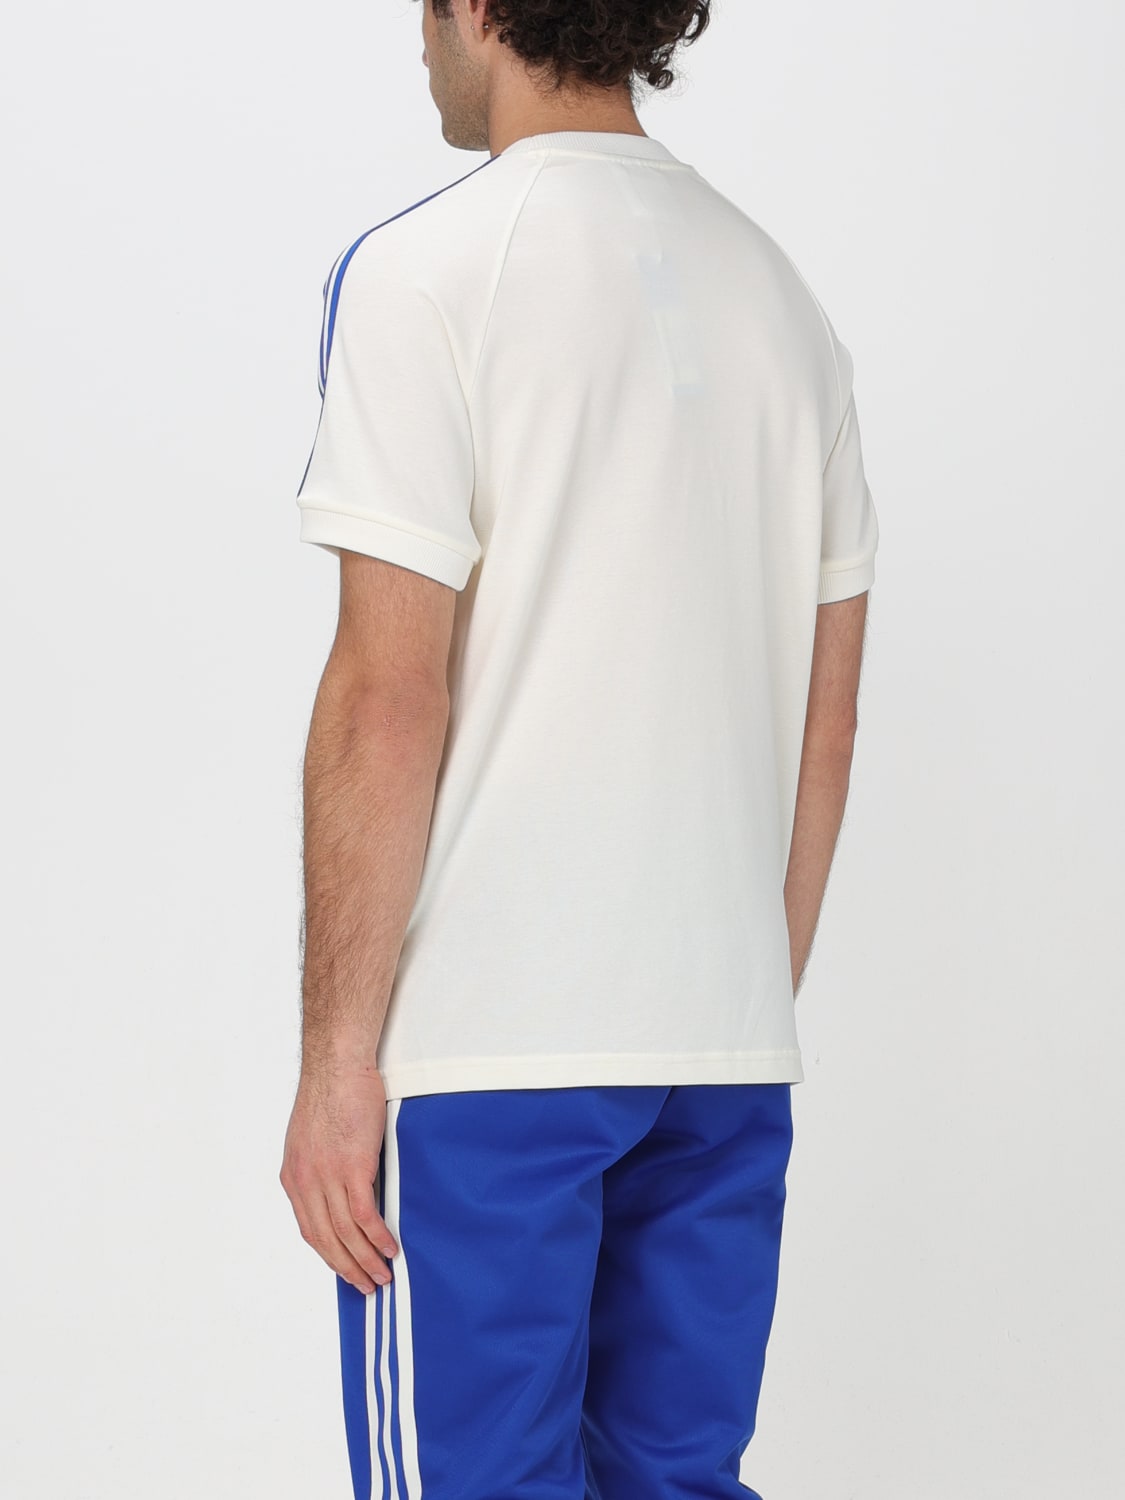 ADIDAS ORIGINALS: T-shirt homme - Blanc